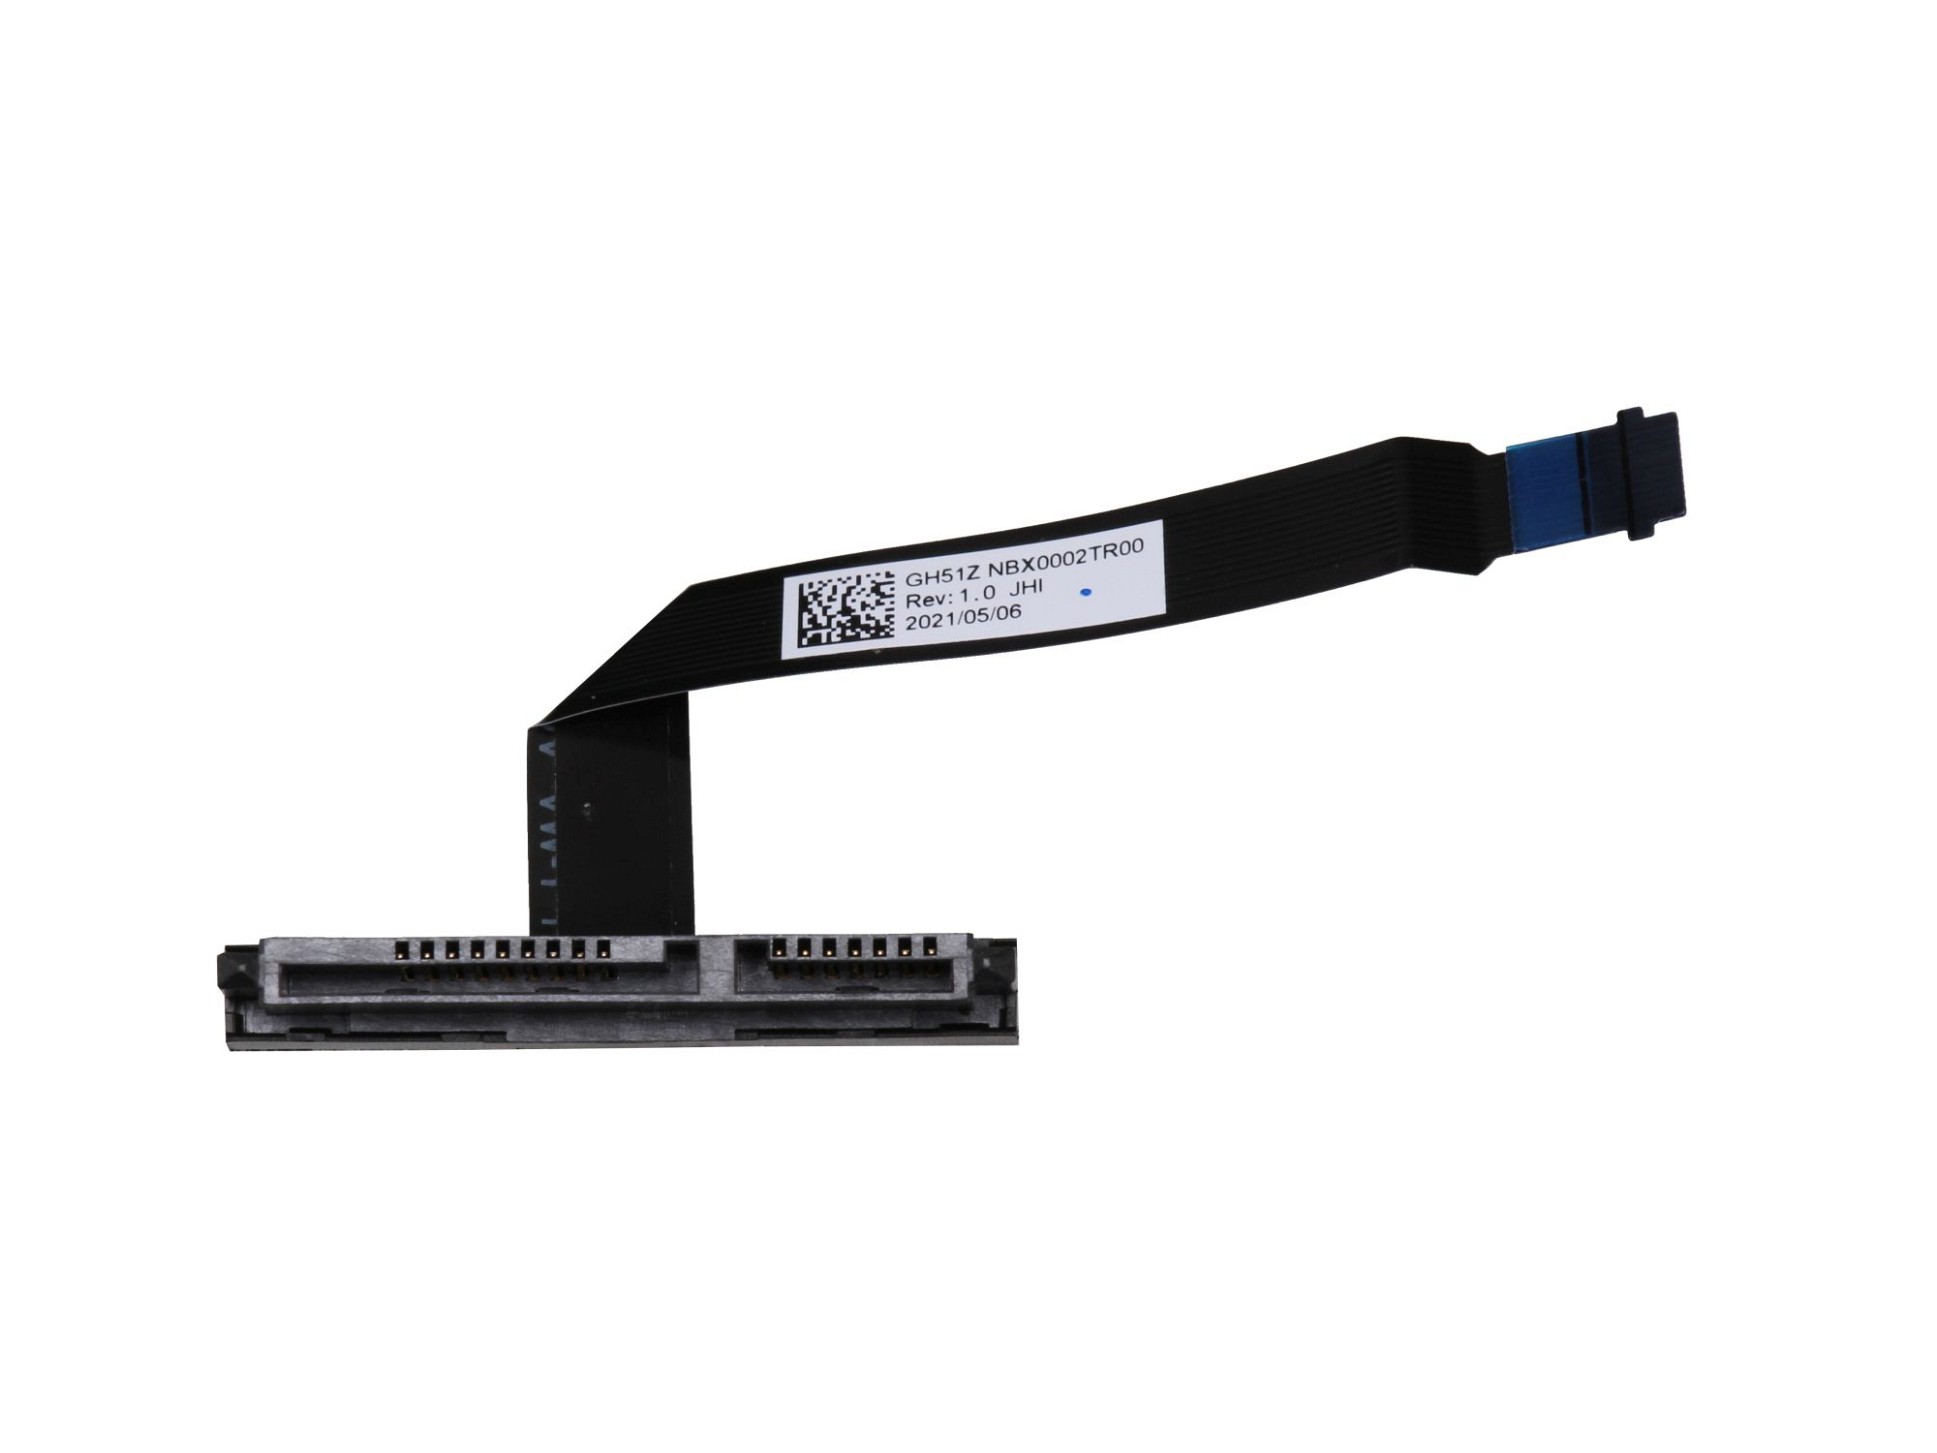 Acer GH512.NBX0002TR00 Rev:1.0 JHI Festplatten-Adapter für den 1. Festplatten Schacht Original